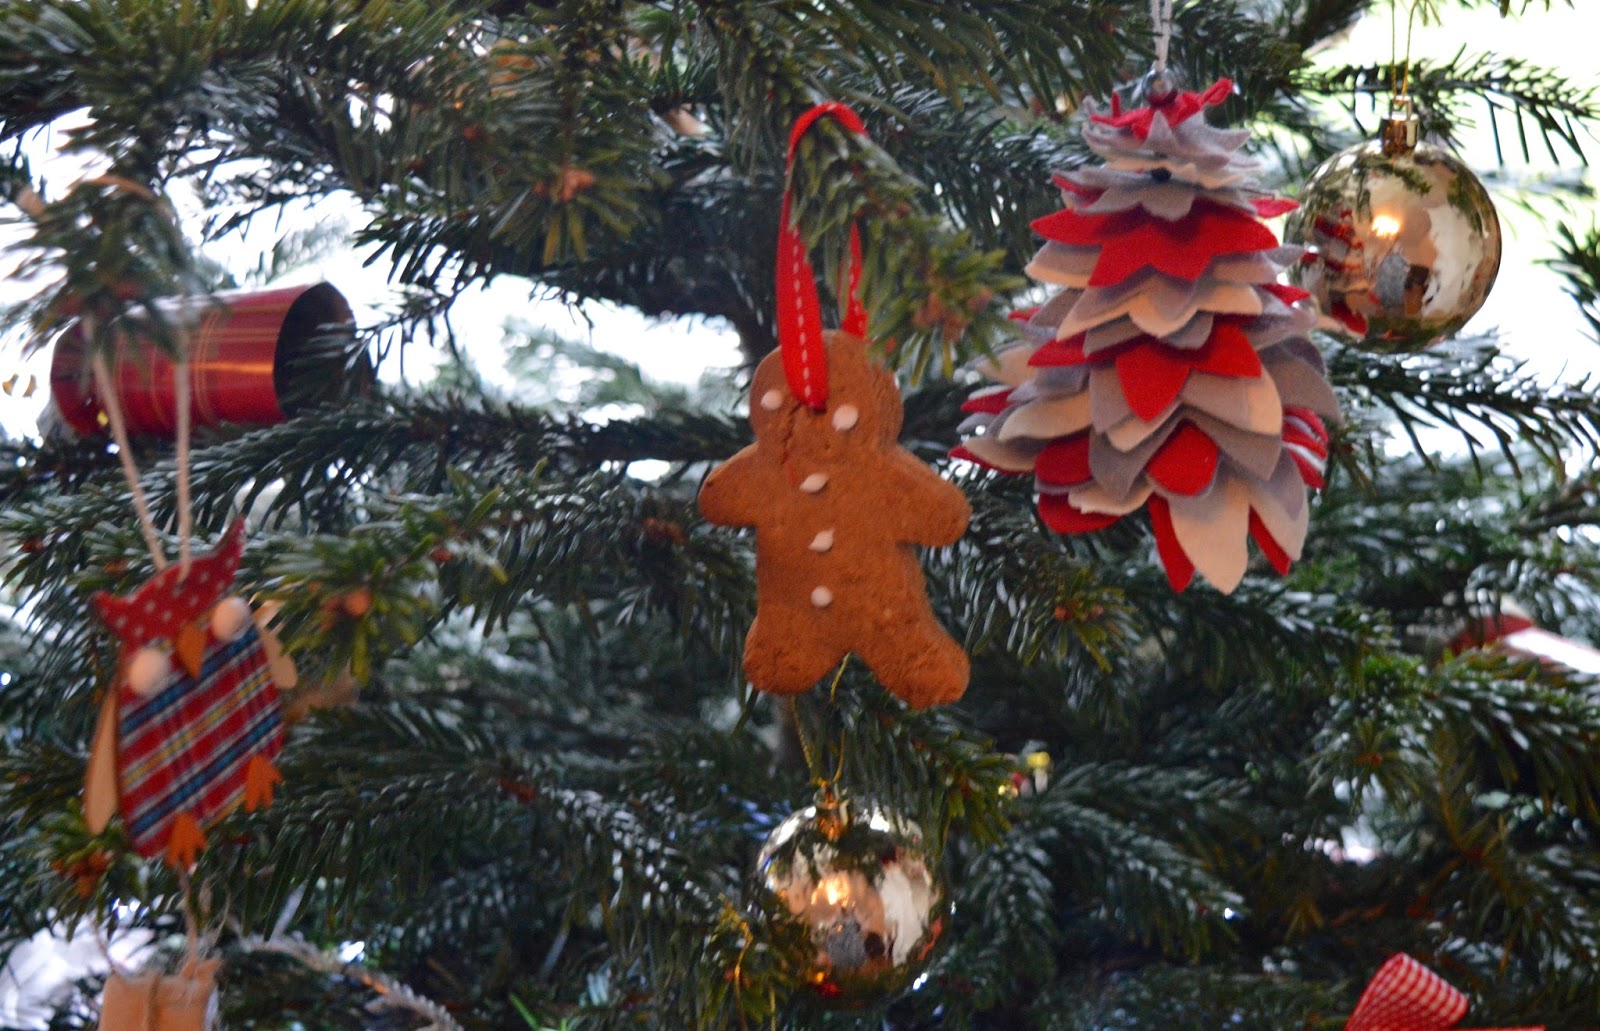 Easy Homemade Gingerbread Christmas Tree Decorations | A Recipe - gingerbread decorations on Christmas tree